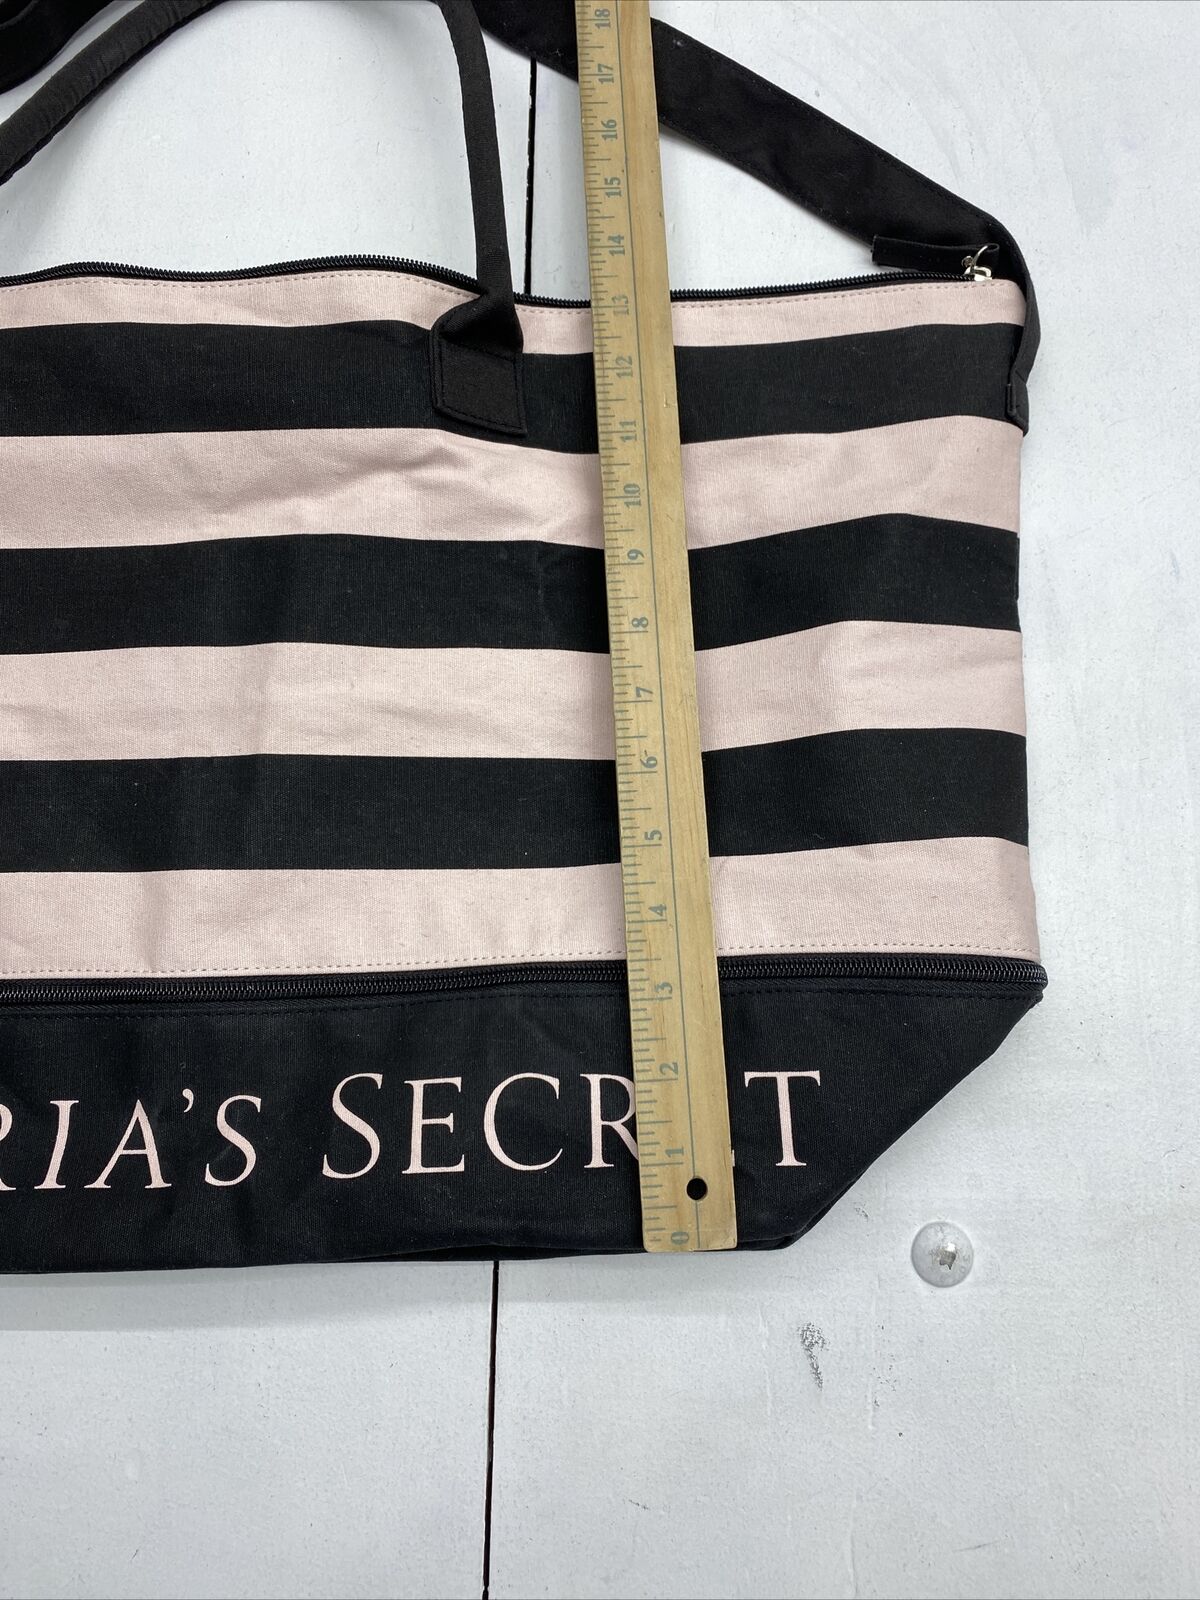 Victoria's Secret Expandable Weekender Tote Bag, Pink/Black Stripe